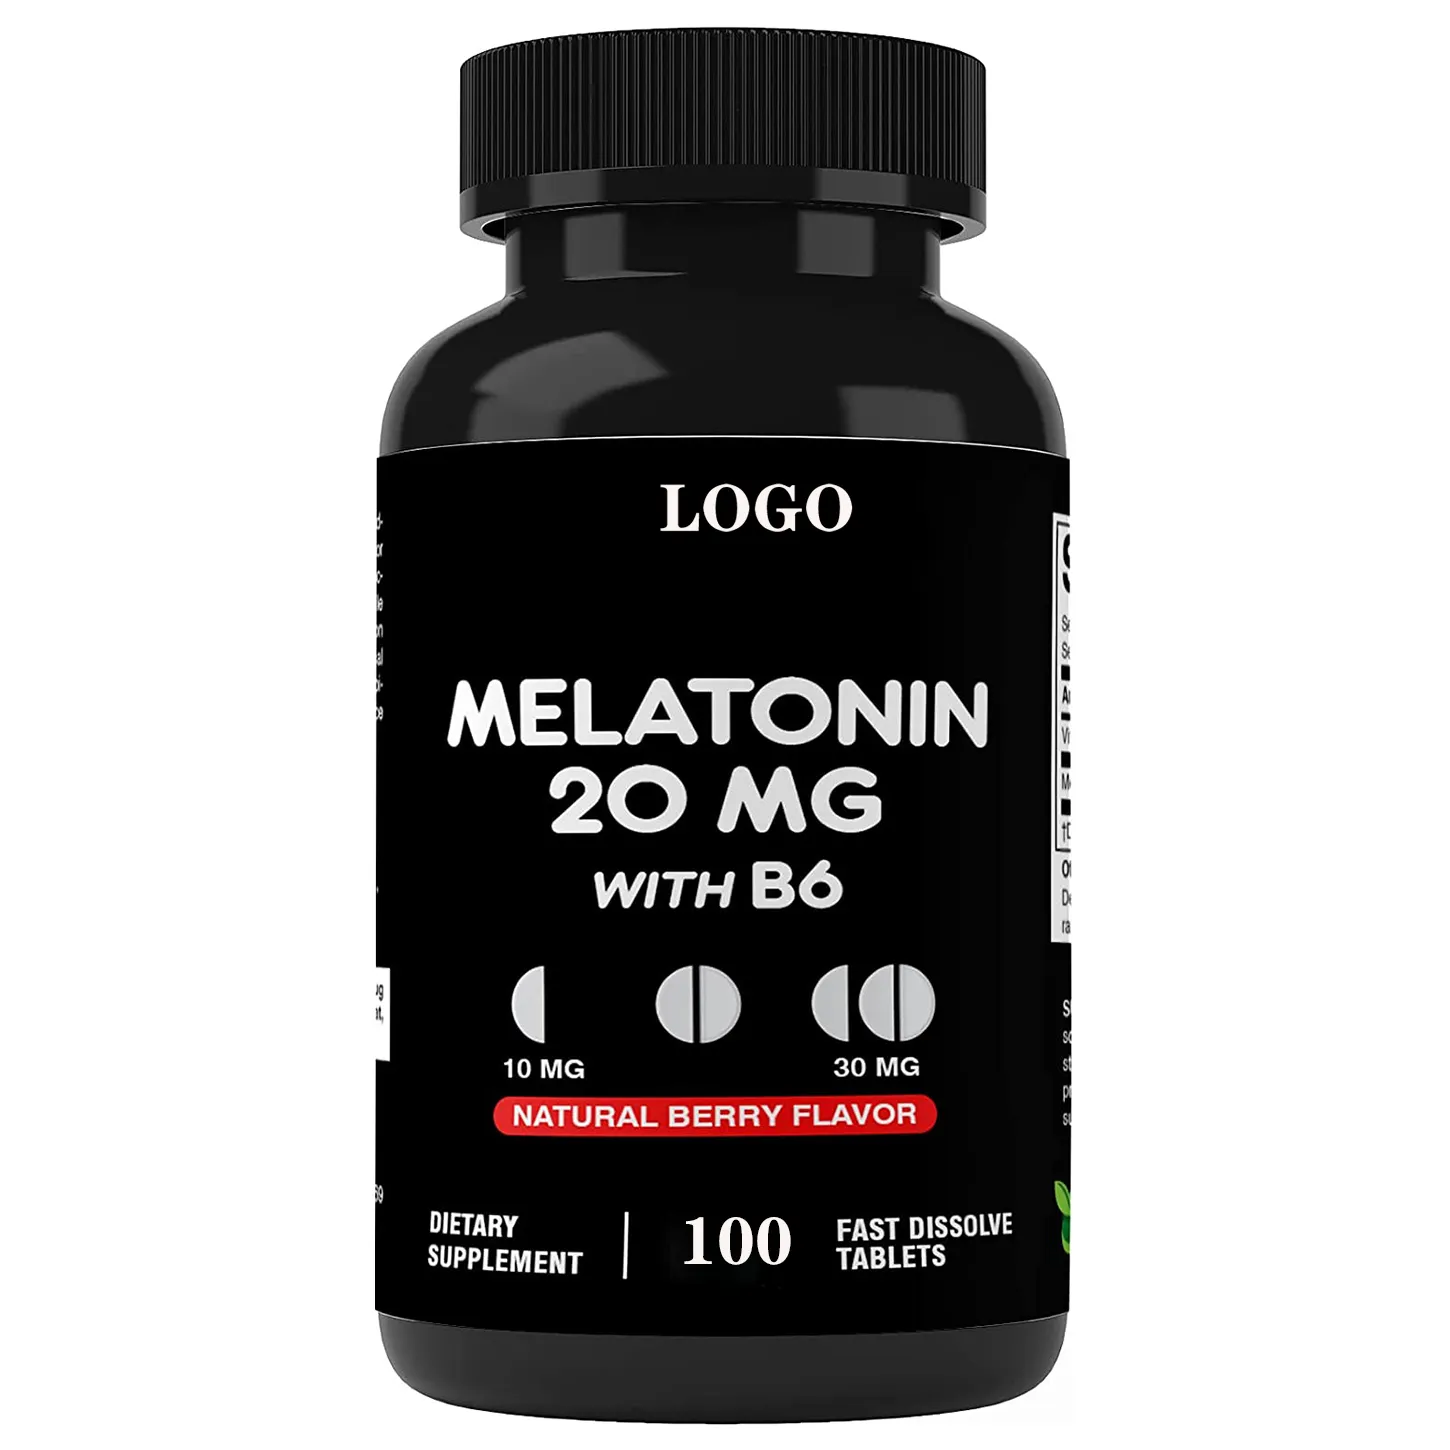 OEM/ODM 5 10 12 15 20 30mg Melatonin Pills 100 Fast Dissolve Tablets for Sleep Aid Natural Production of Melatonin in the Body